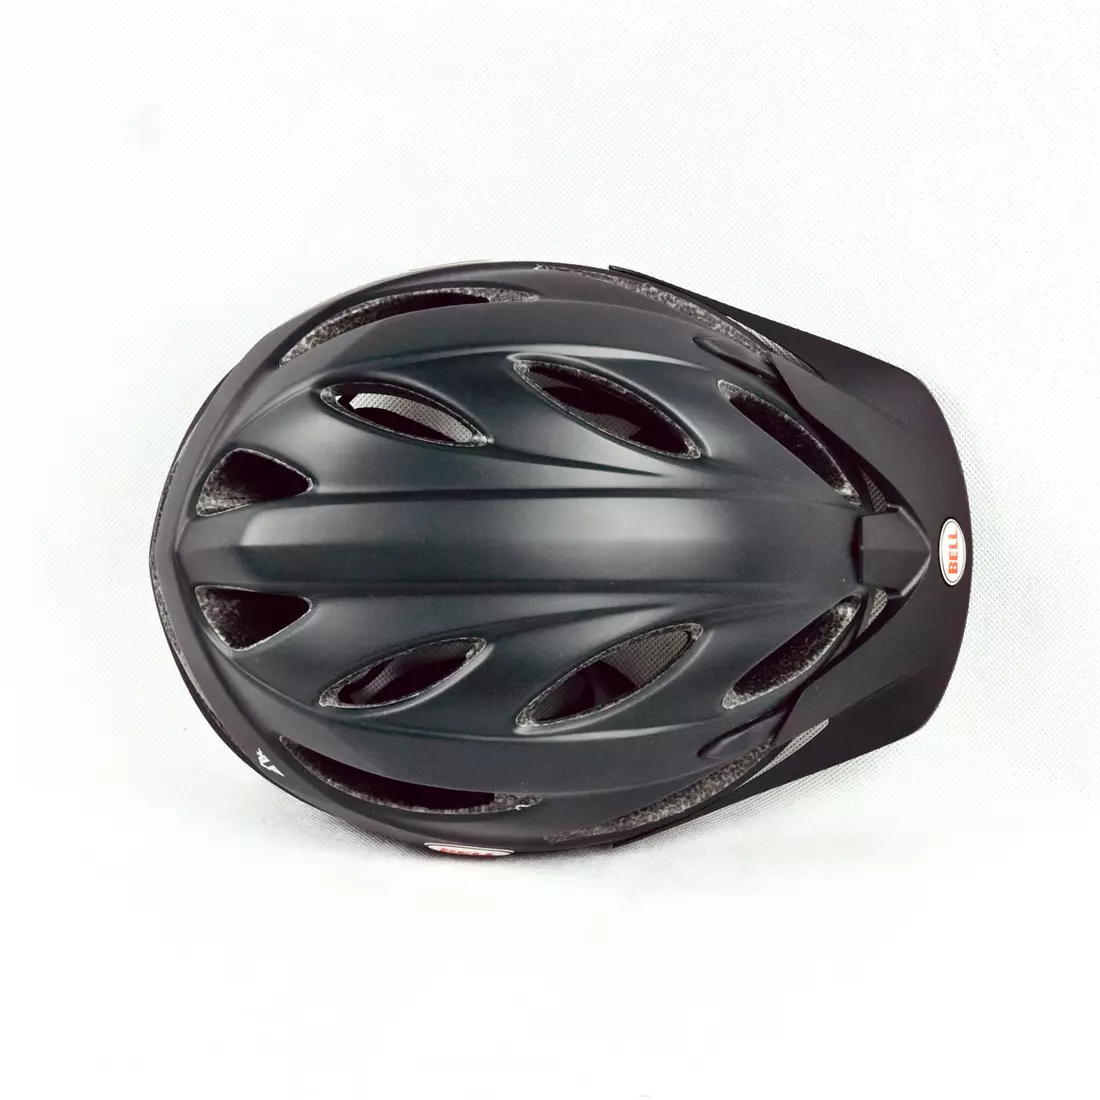 BELL XLP bicycle helmet, matt black, large size